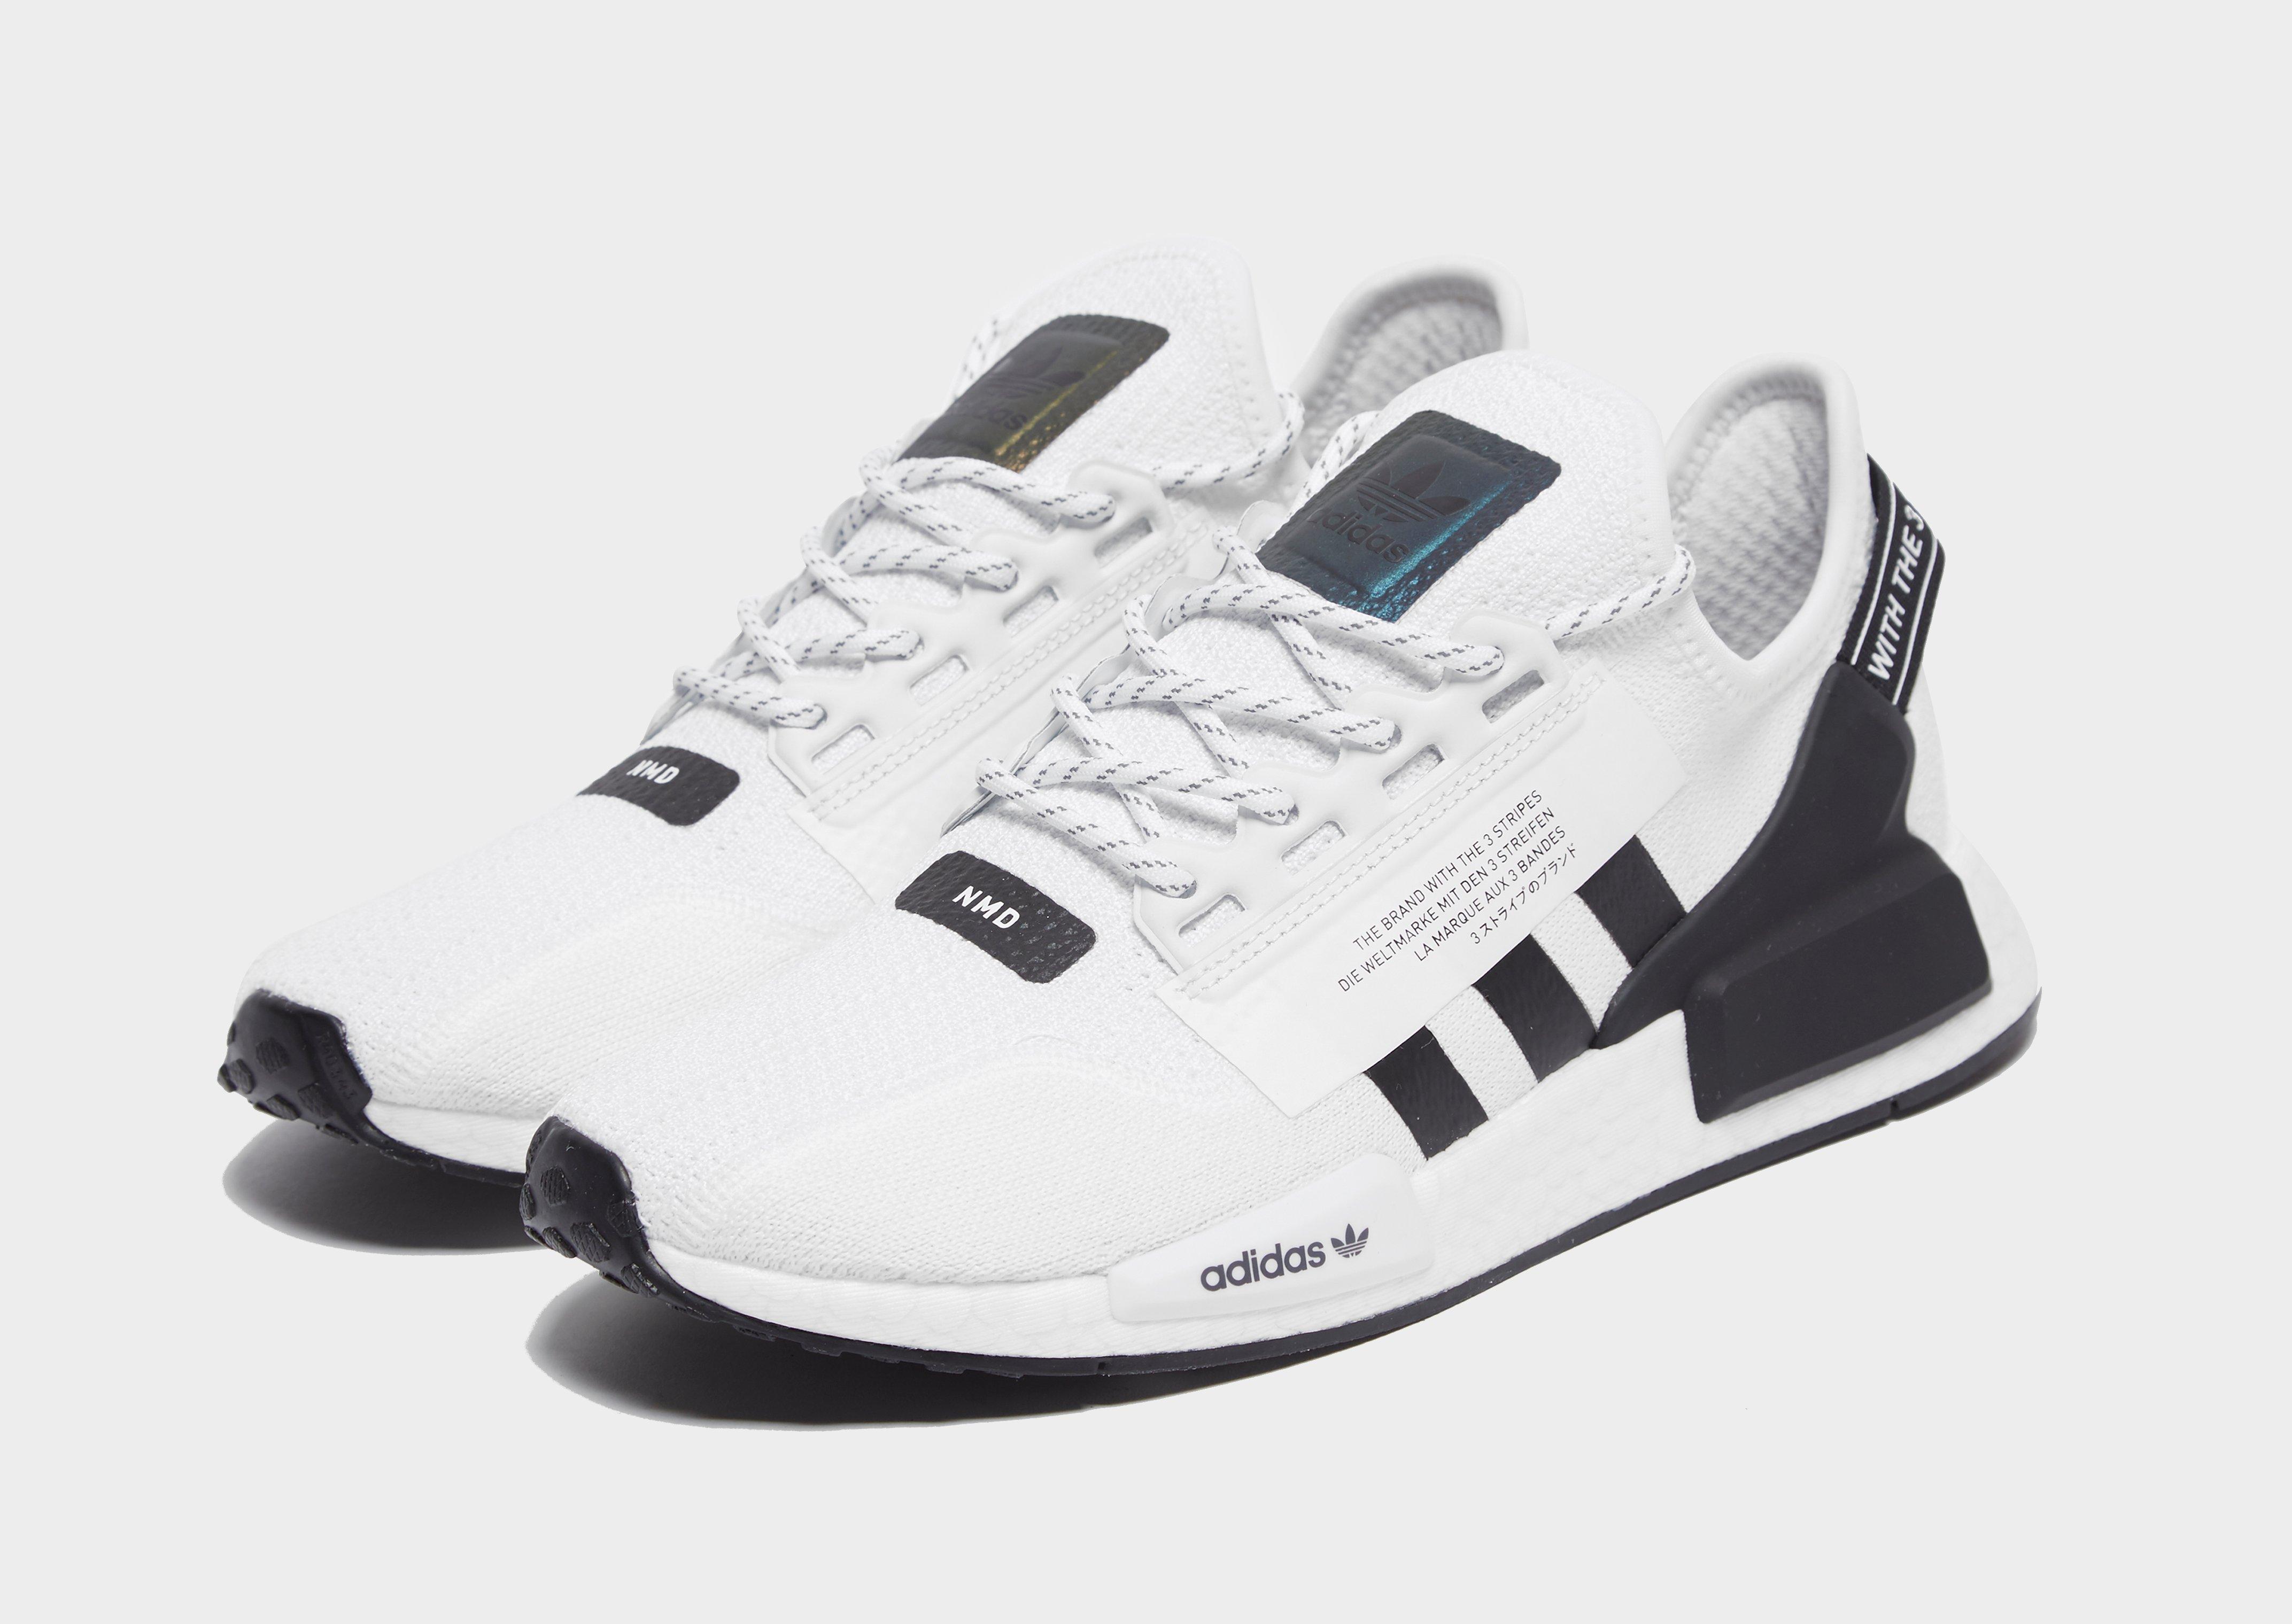 Adidas NMD R1 Mesh Triple White Monochrome Pack Sneaker